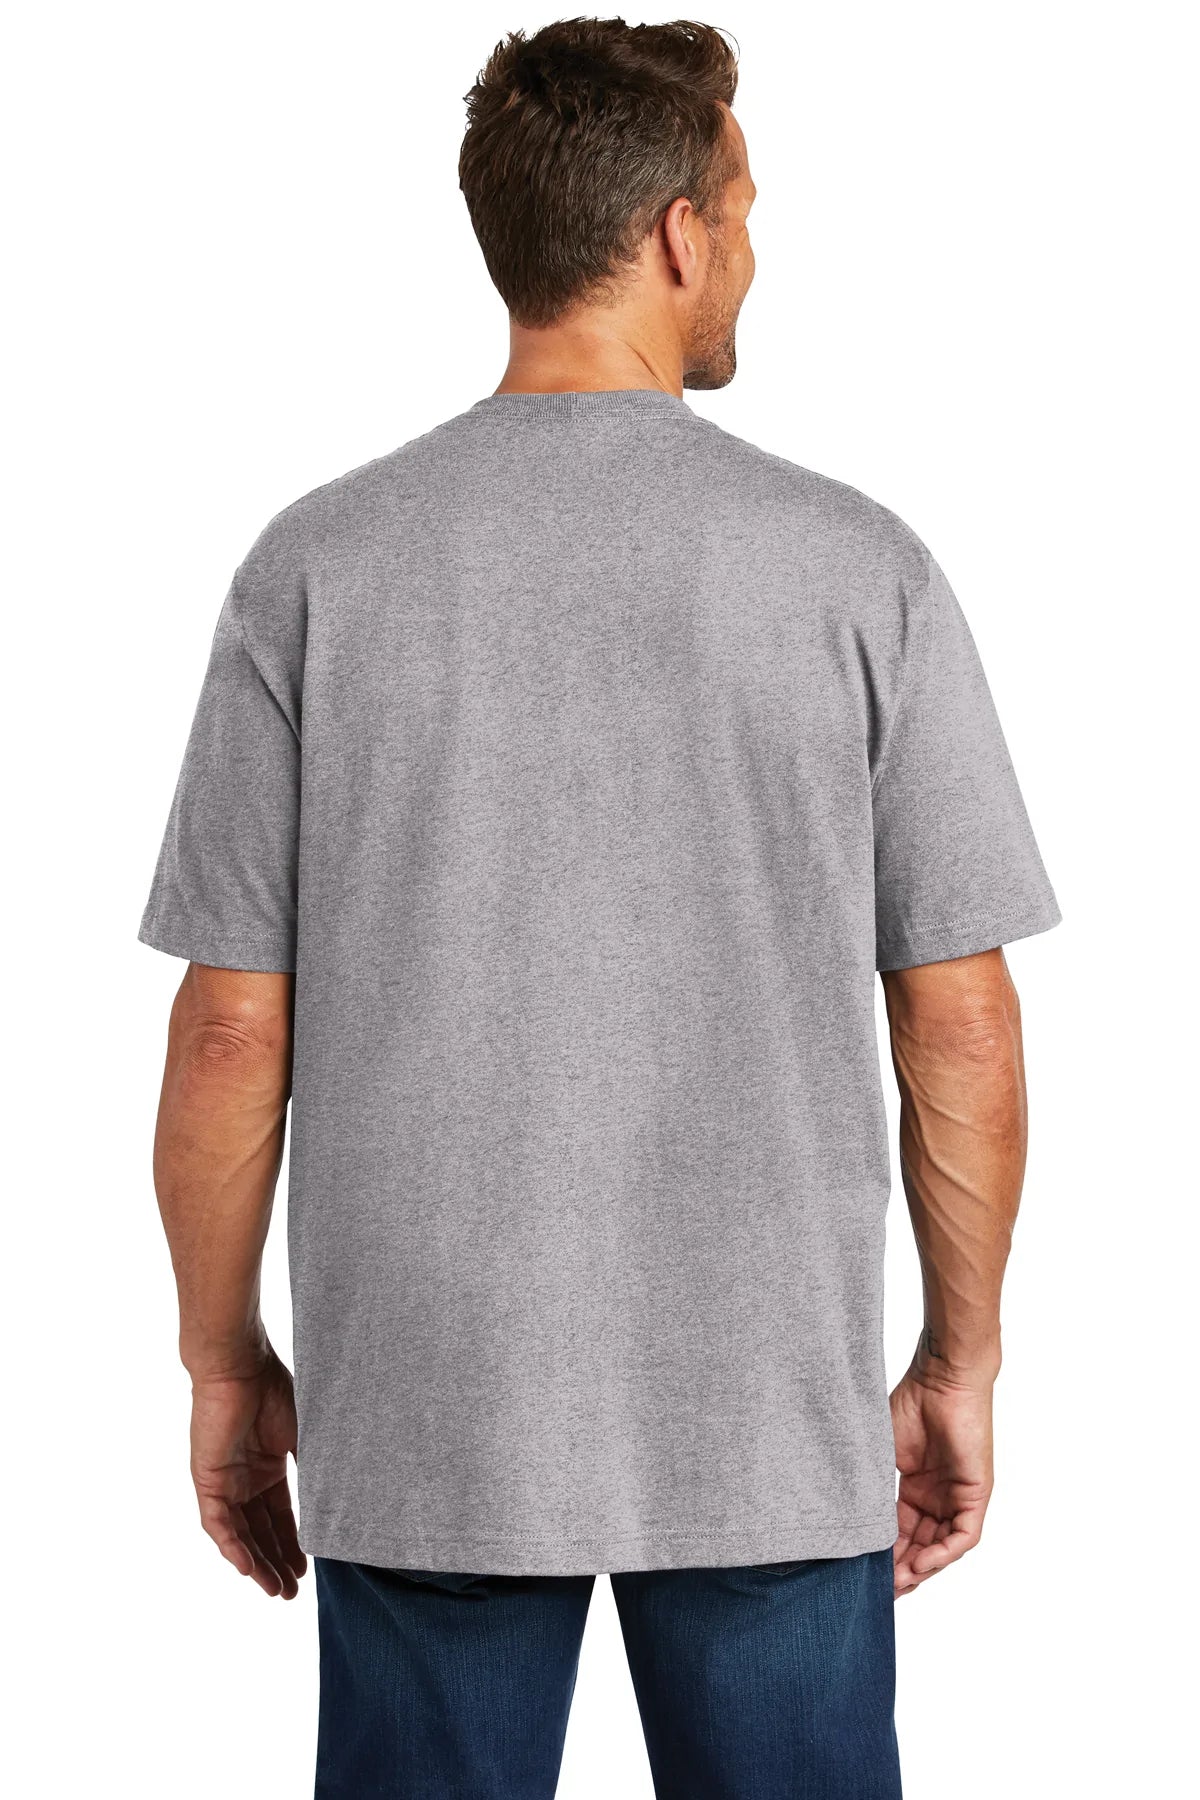 carhartt workwear pocket short sleeve t-shirt ctk87 heather grey